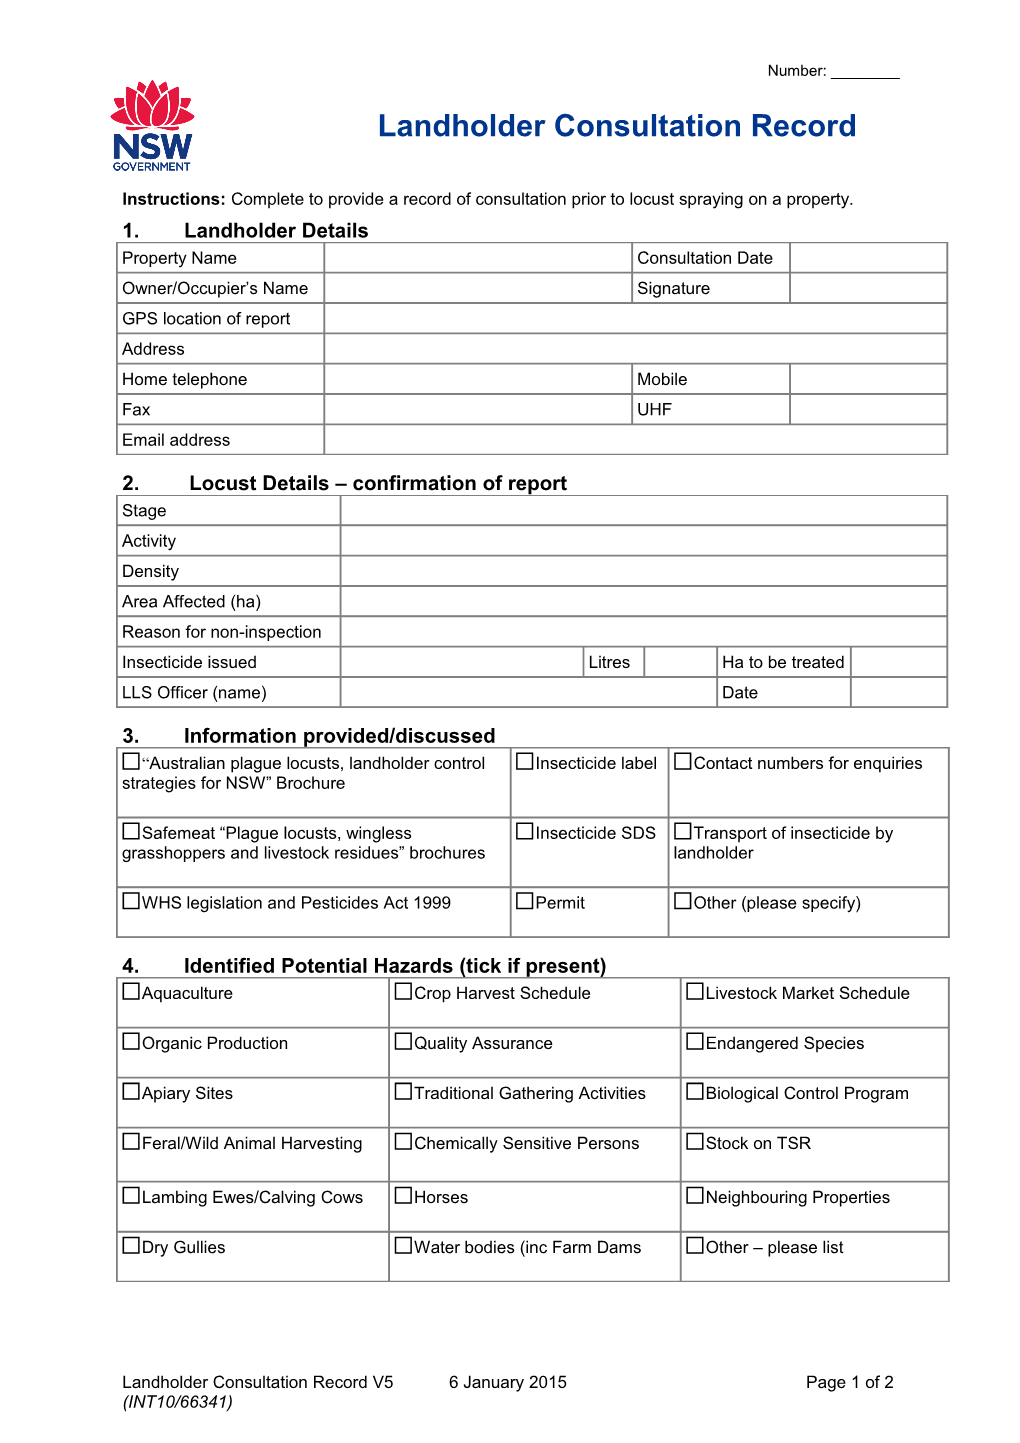 Form - Landholder Consultation Record